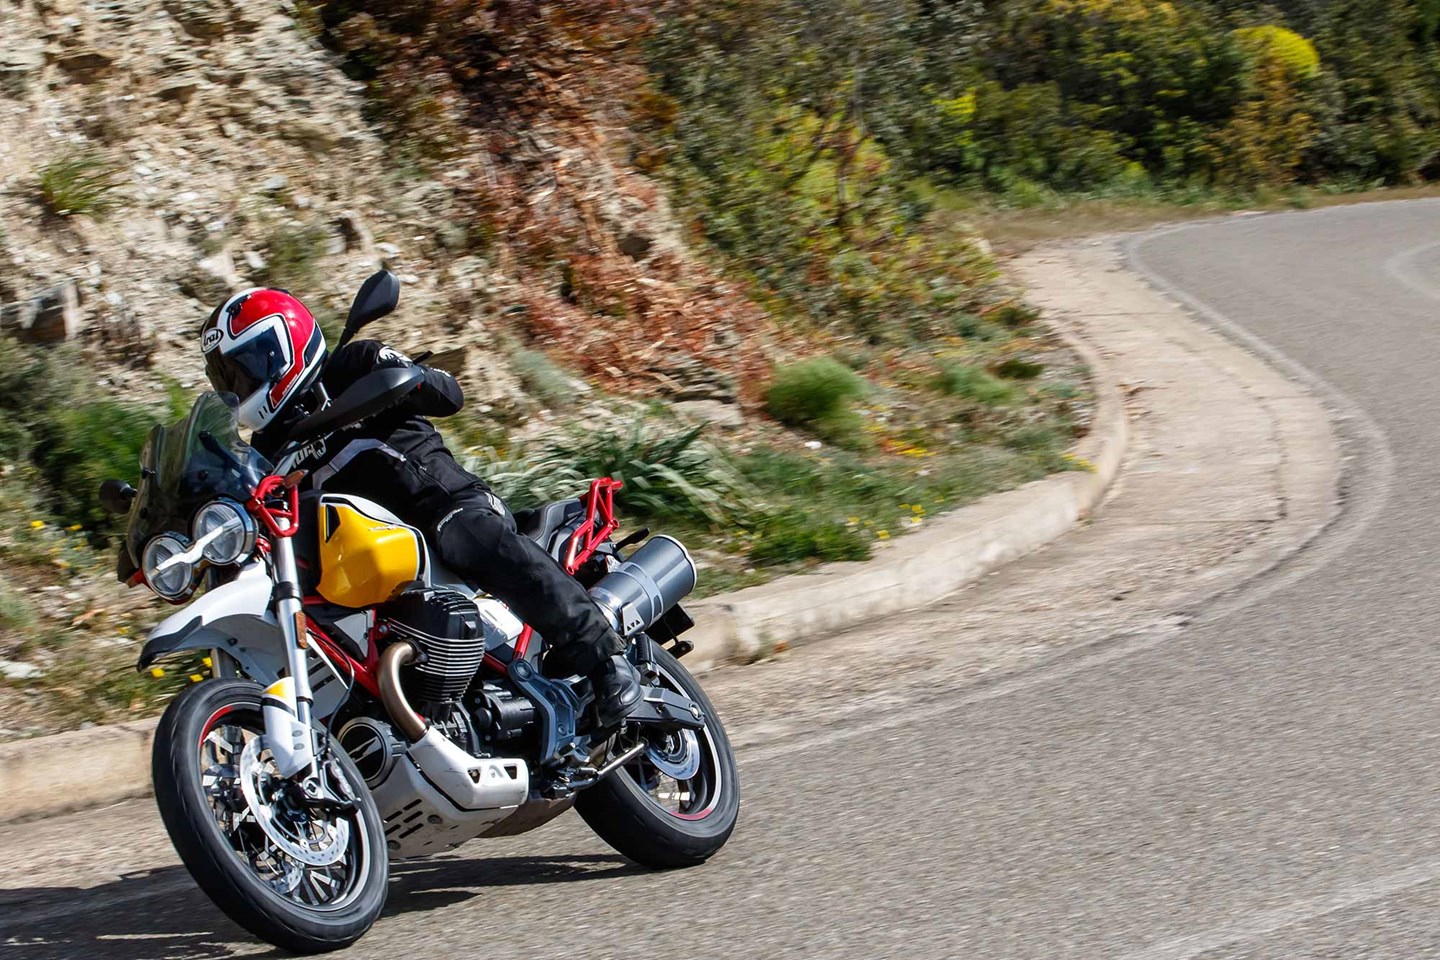 Moto Guzzi V85 TT 850: price, consumption, colors